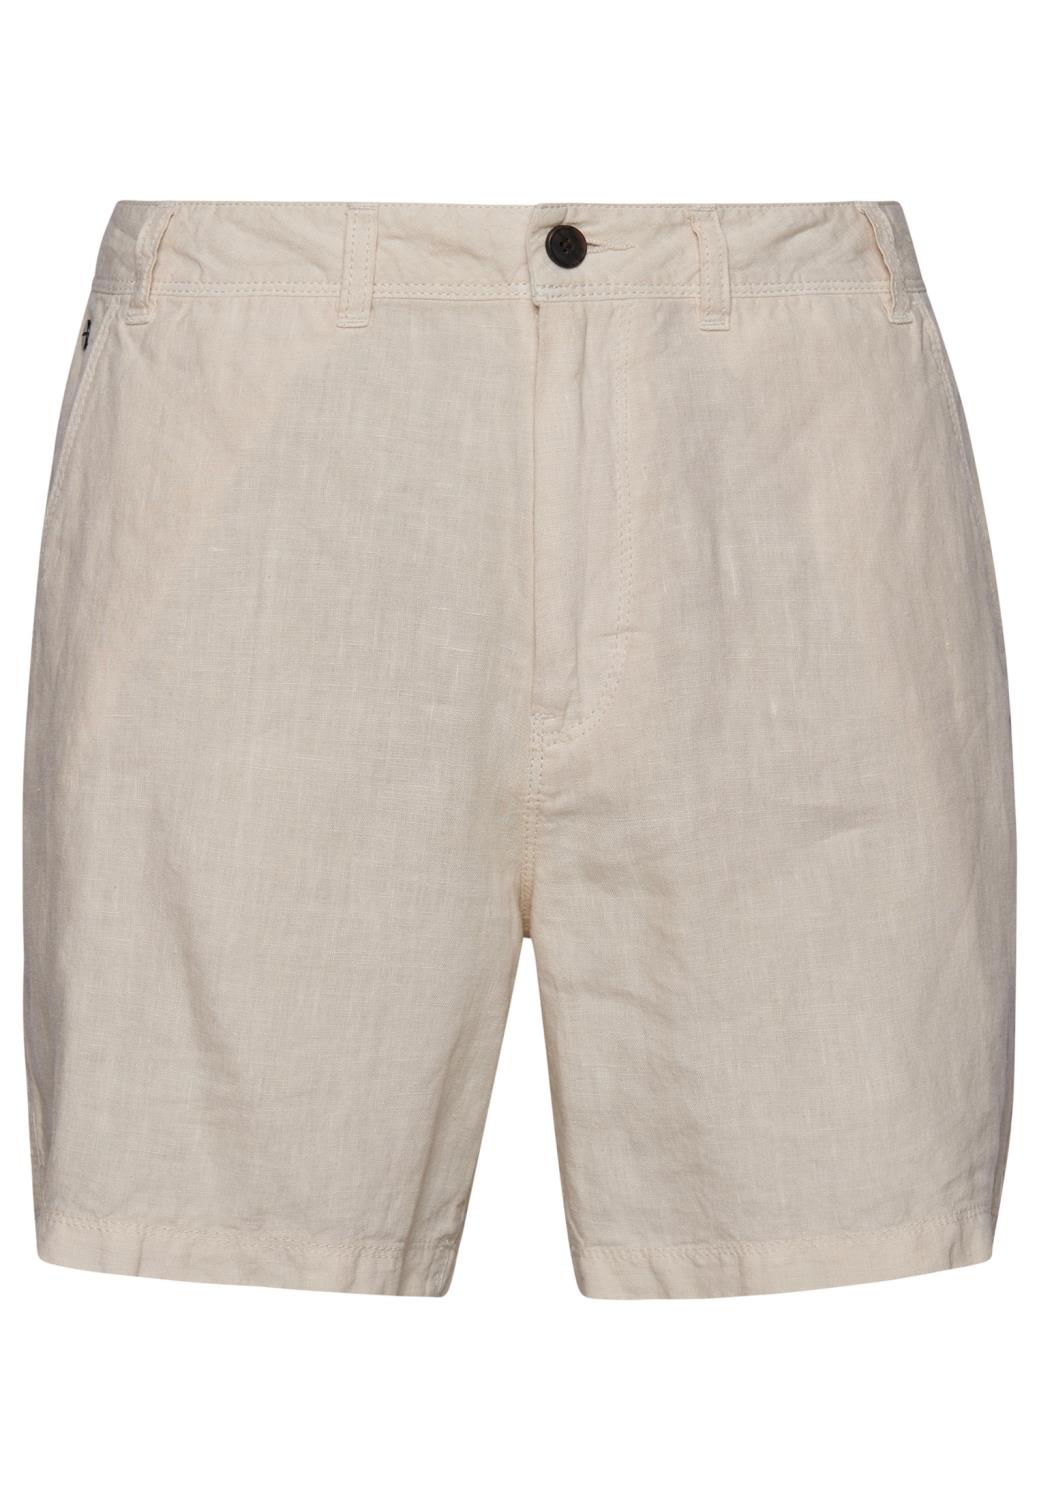 Superdry Studios Overdyed Linen Shorts - Birch Beige